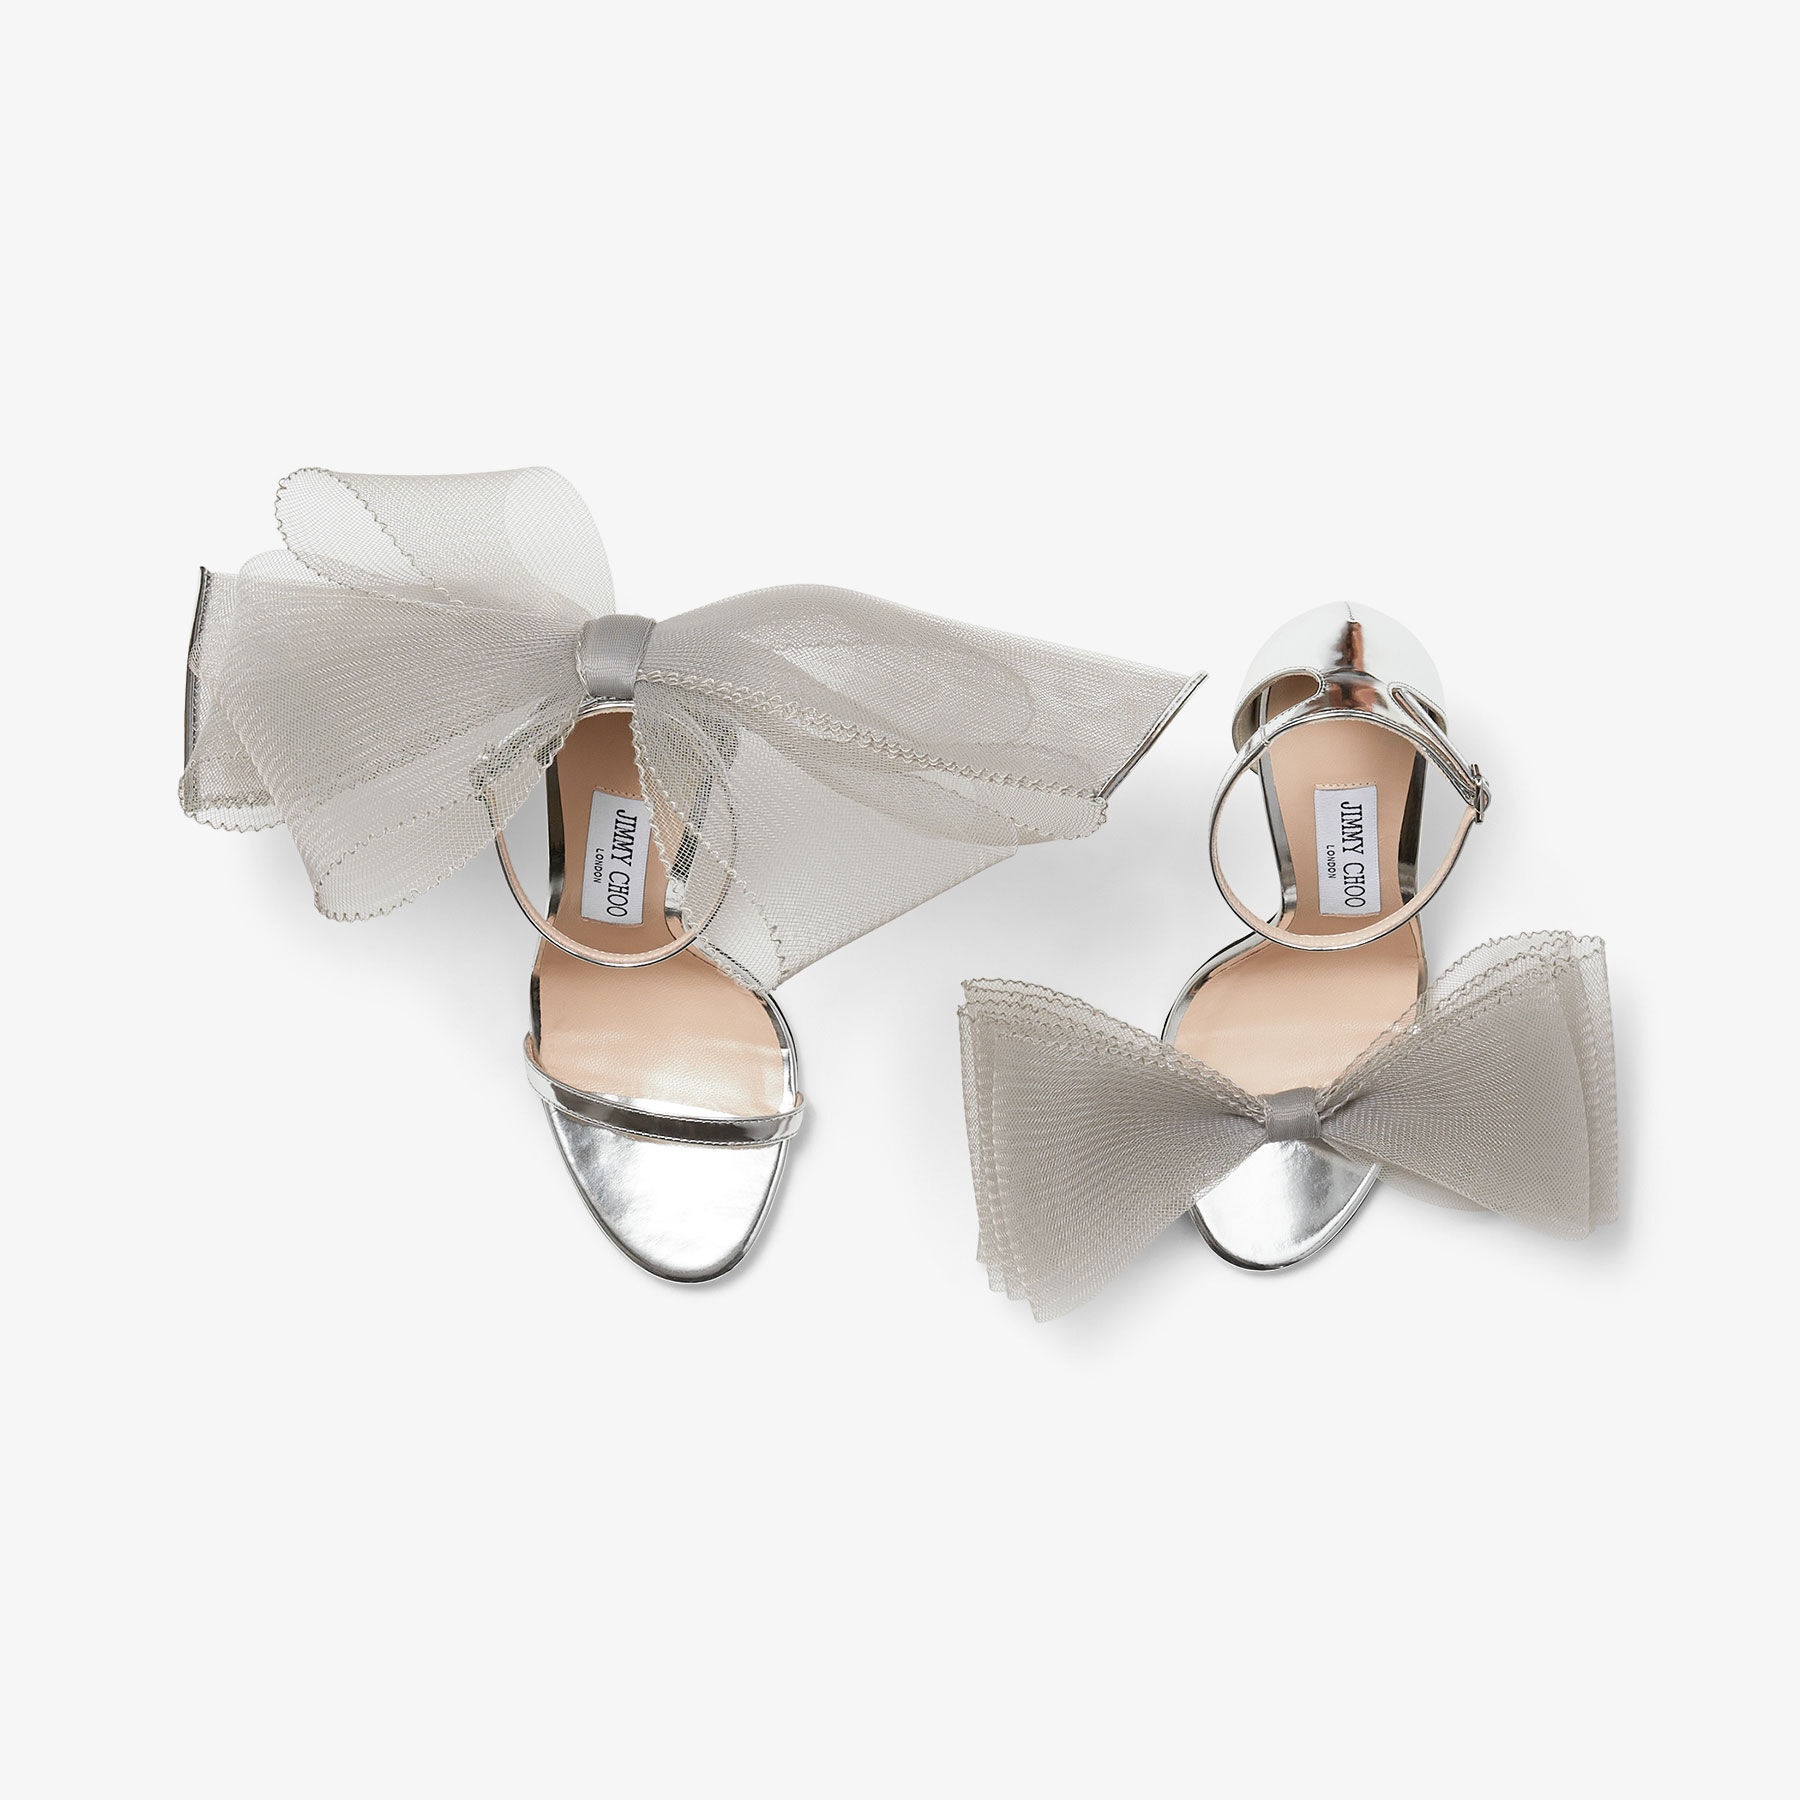 Aveline 100
Silver Sandals with Asymmetric Grosgrain Mesh Fascinator Bows - 4